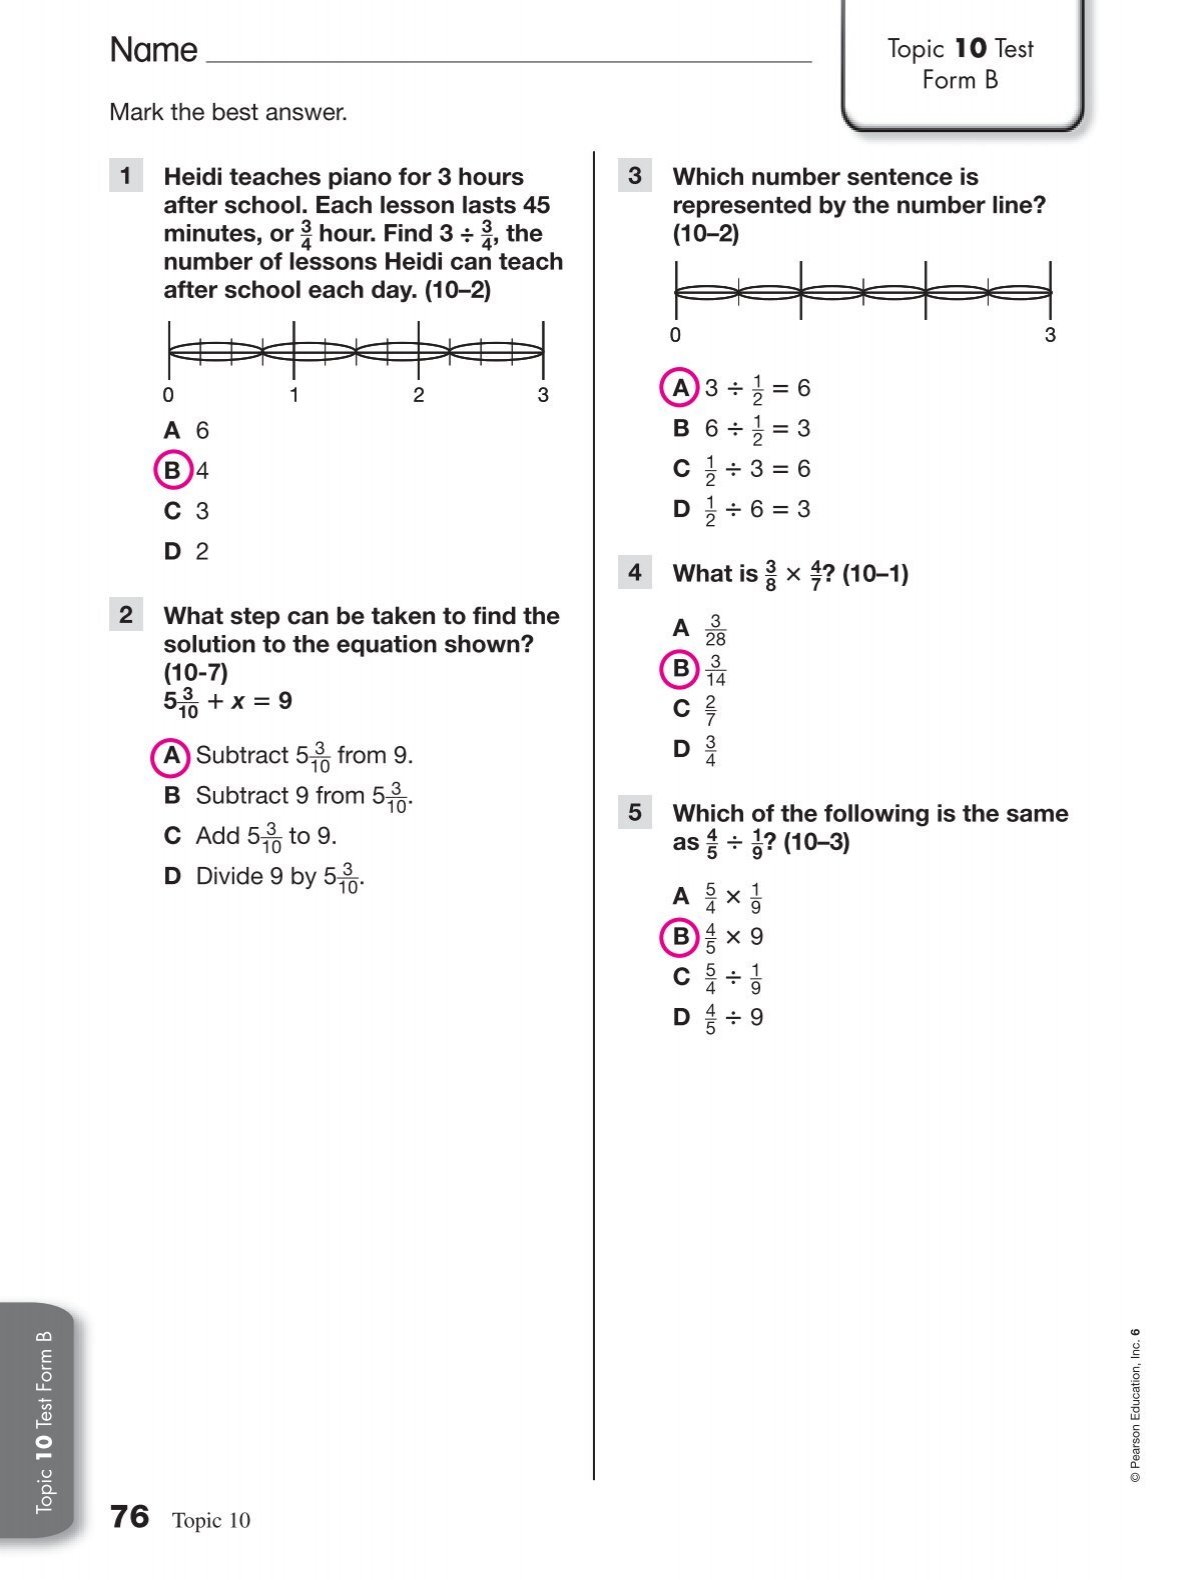 topic-10-test-form-b-answers-pdf-eusd